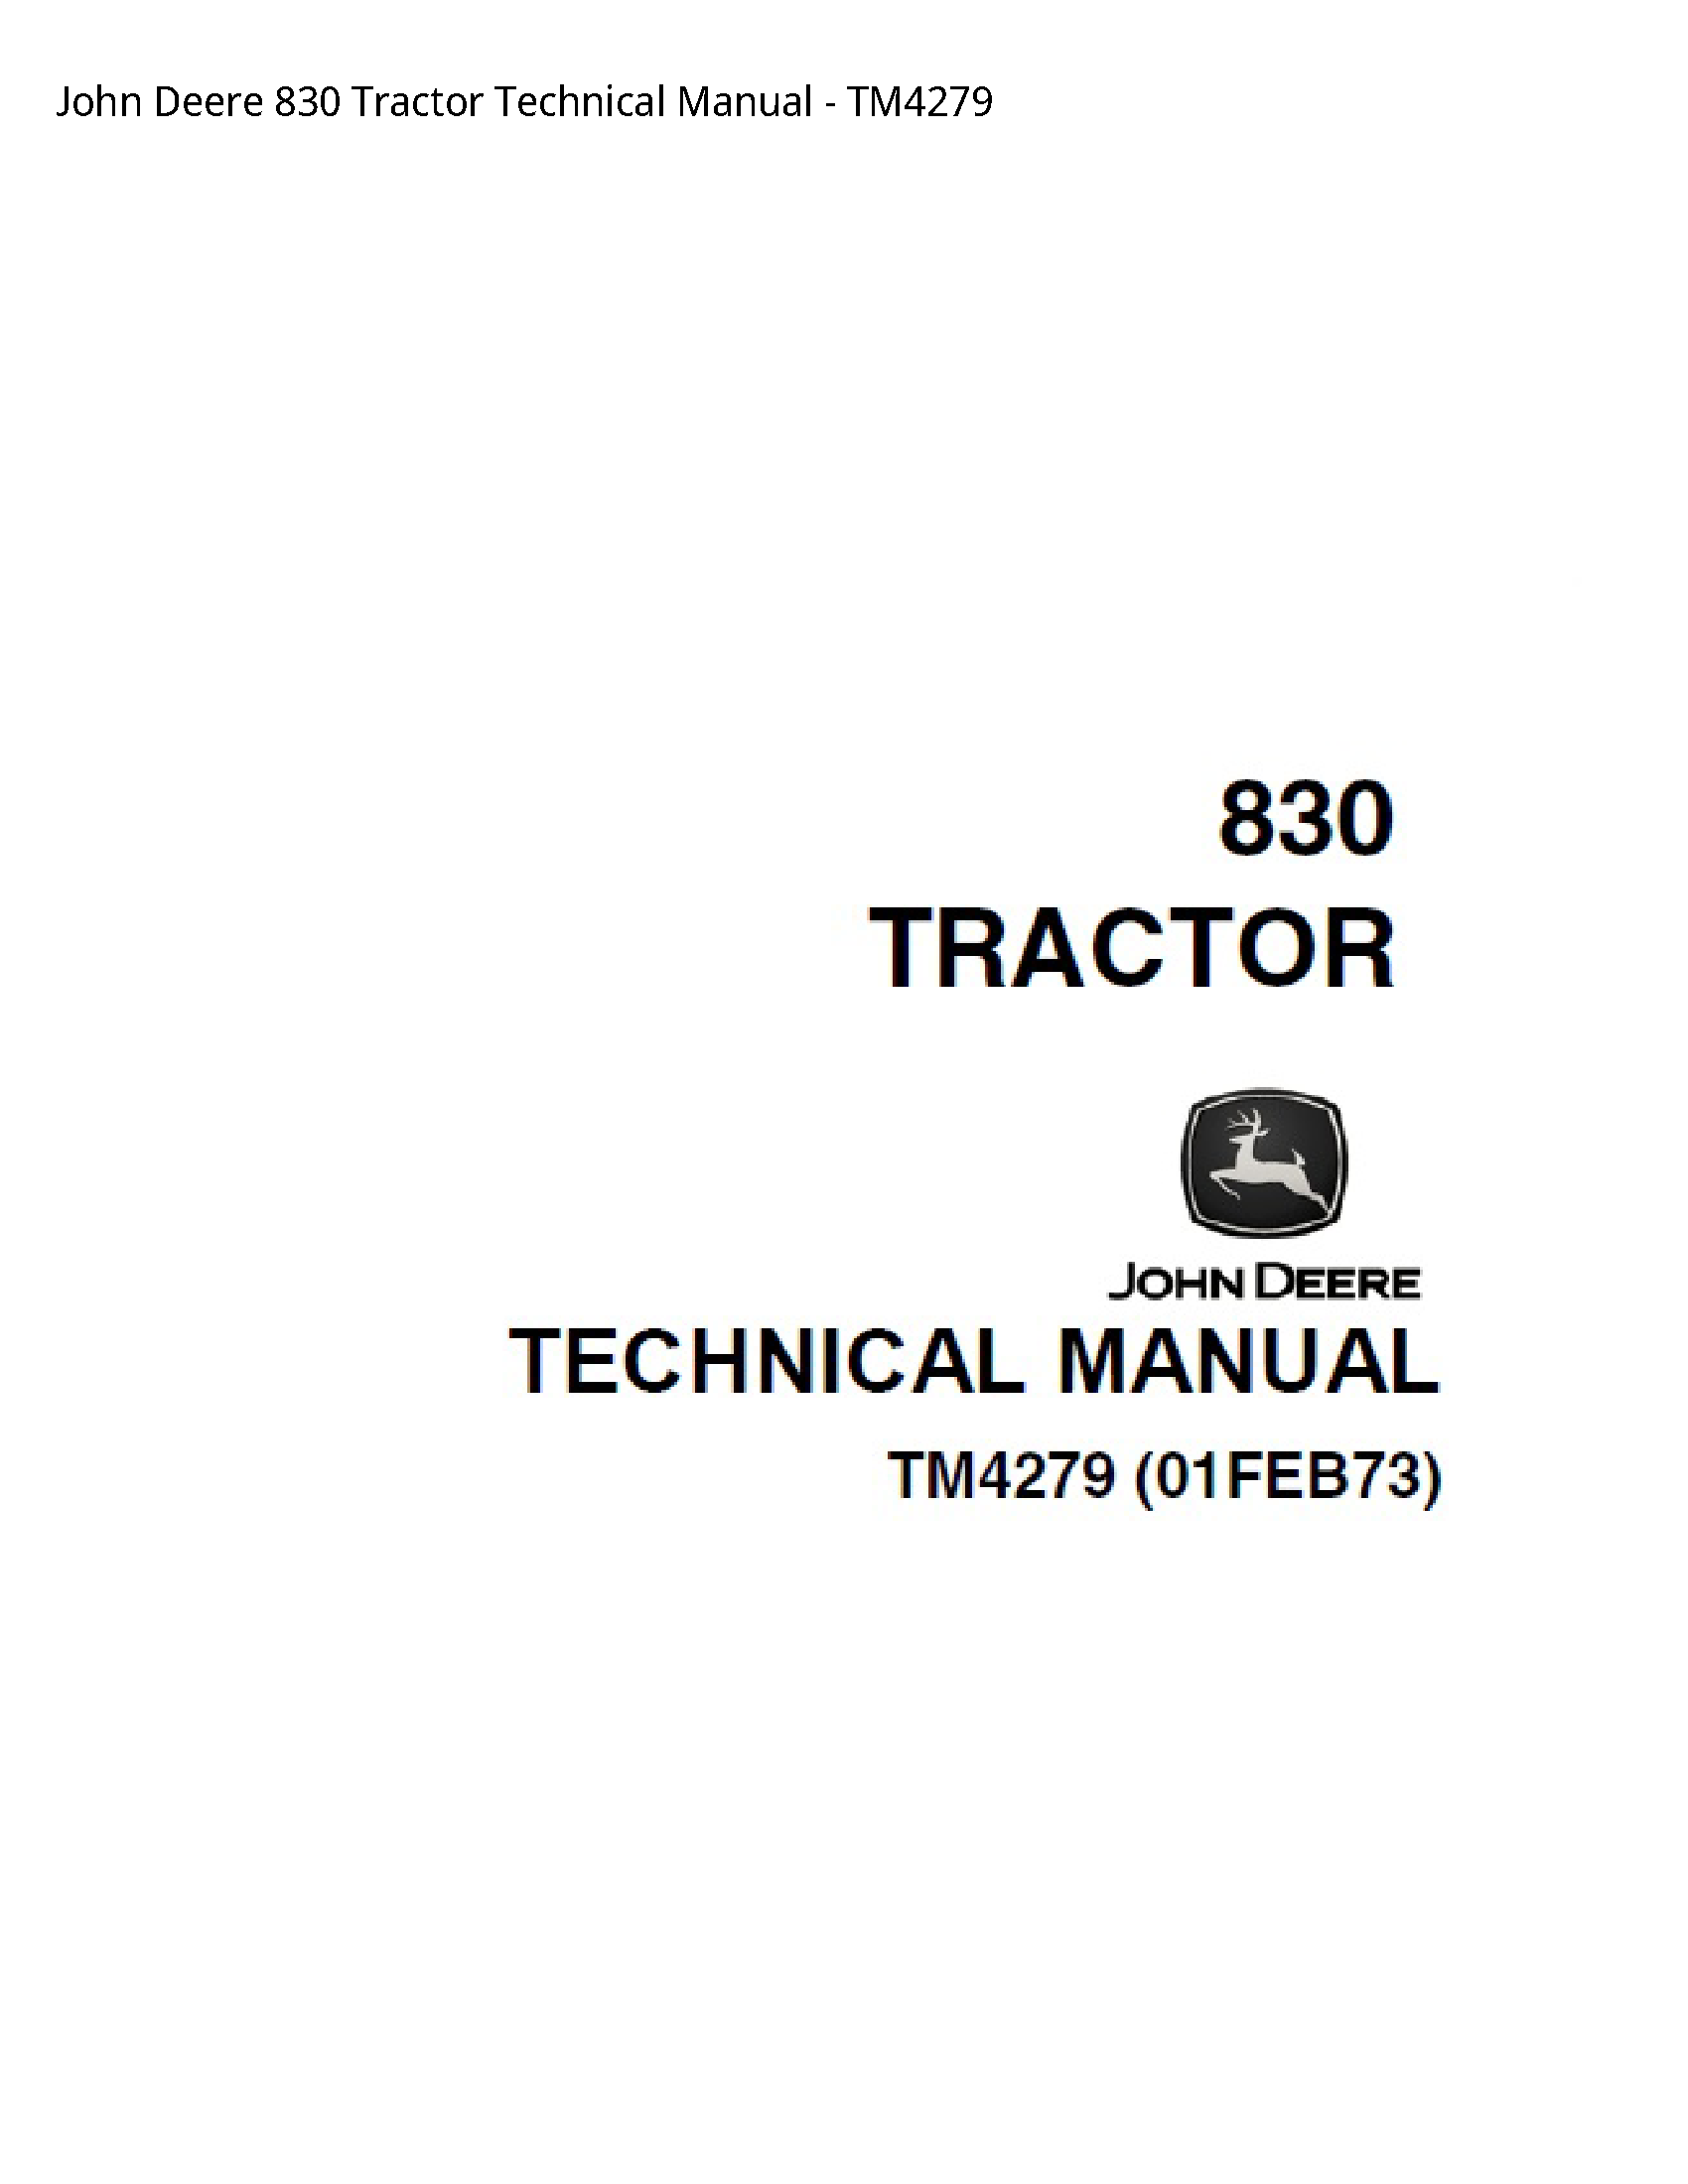 John Deere 830 Tractor Technical manual